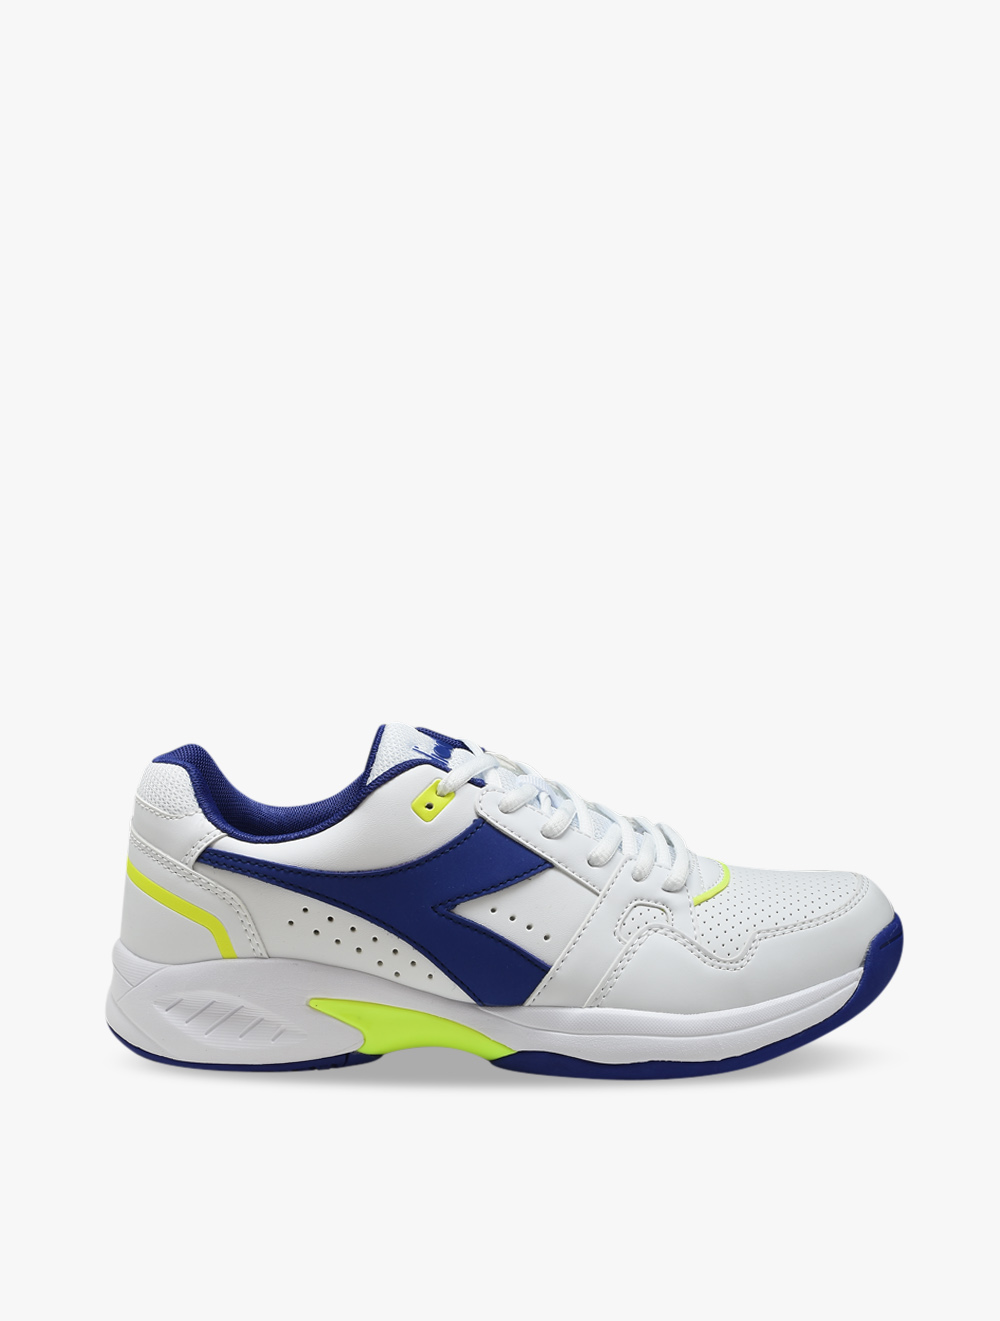 Diadora Volee 3 Men's Tennis Shoes - White